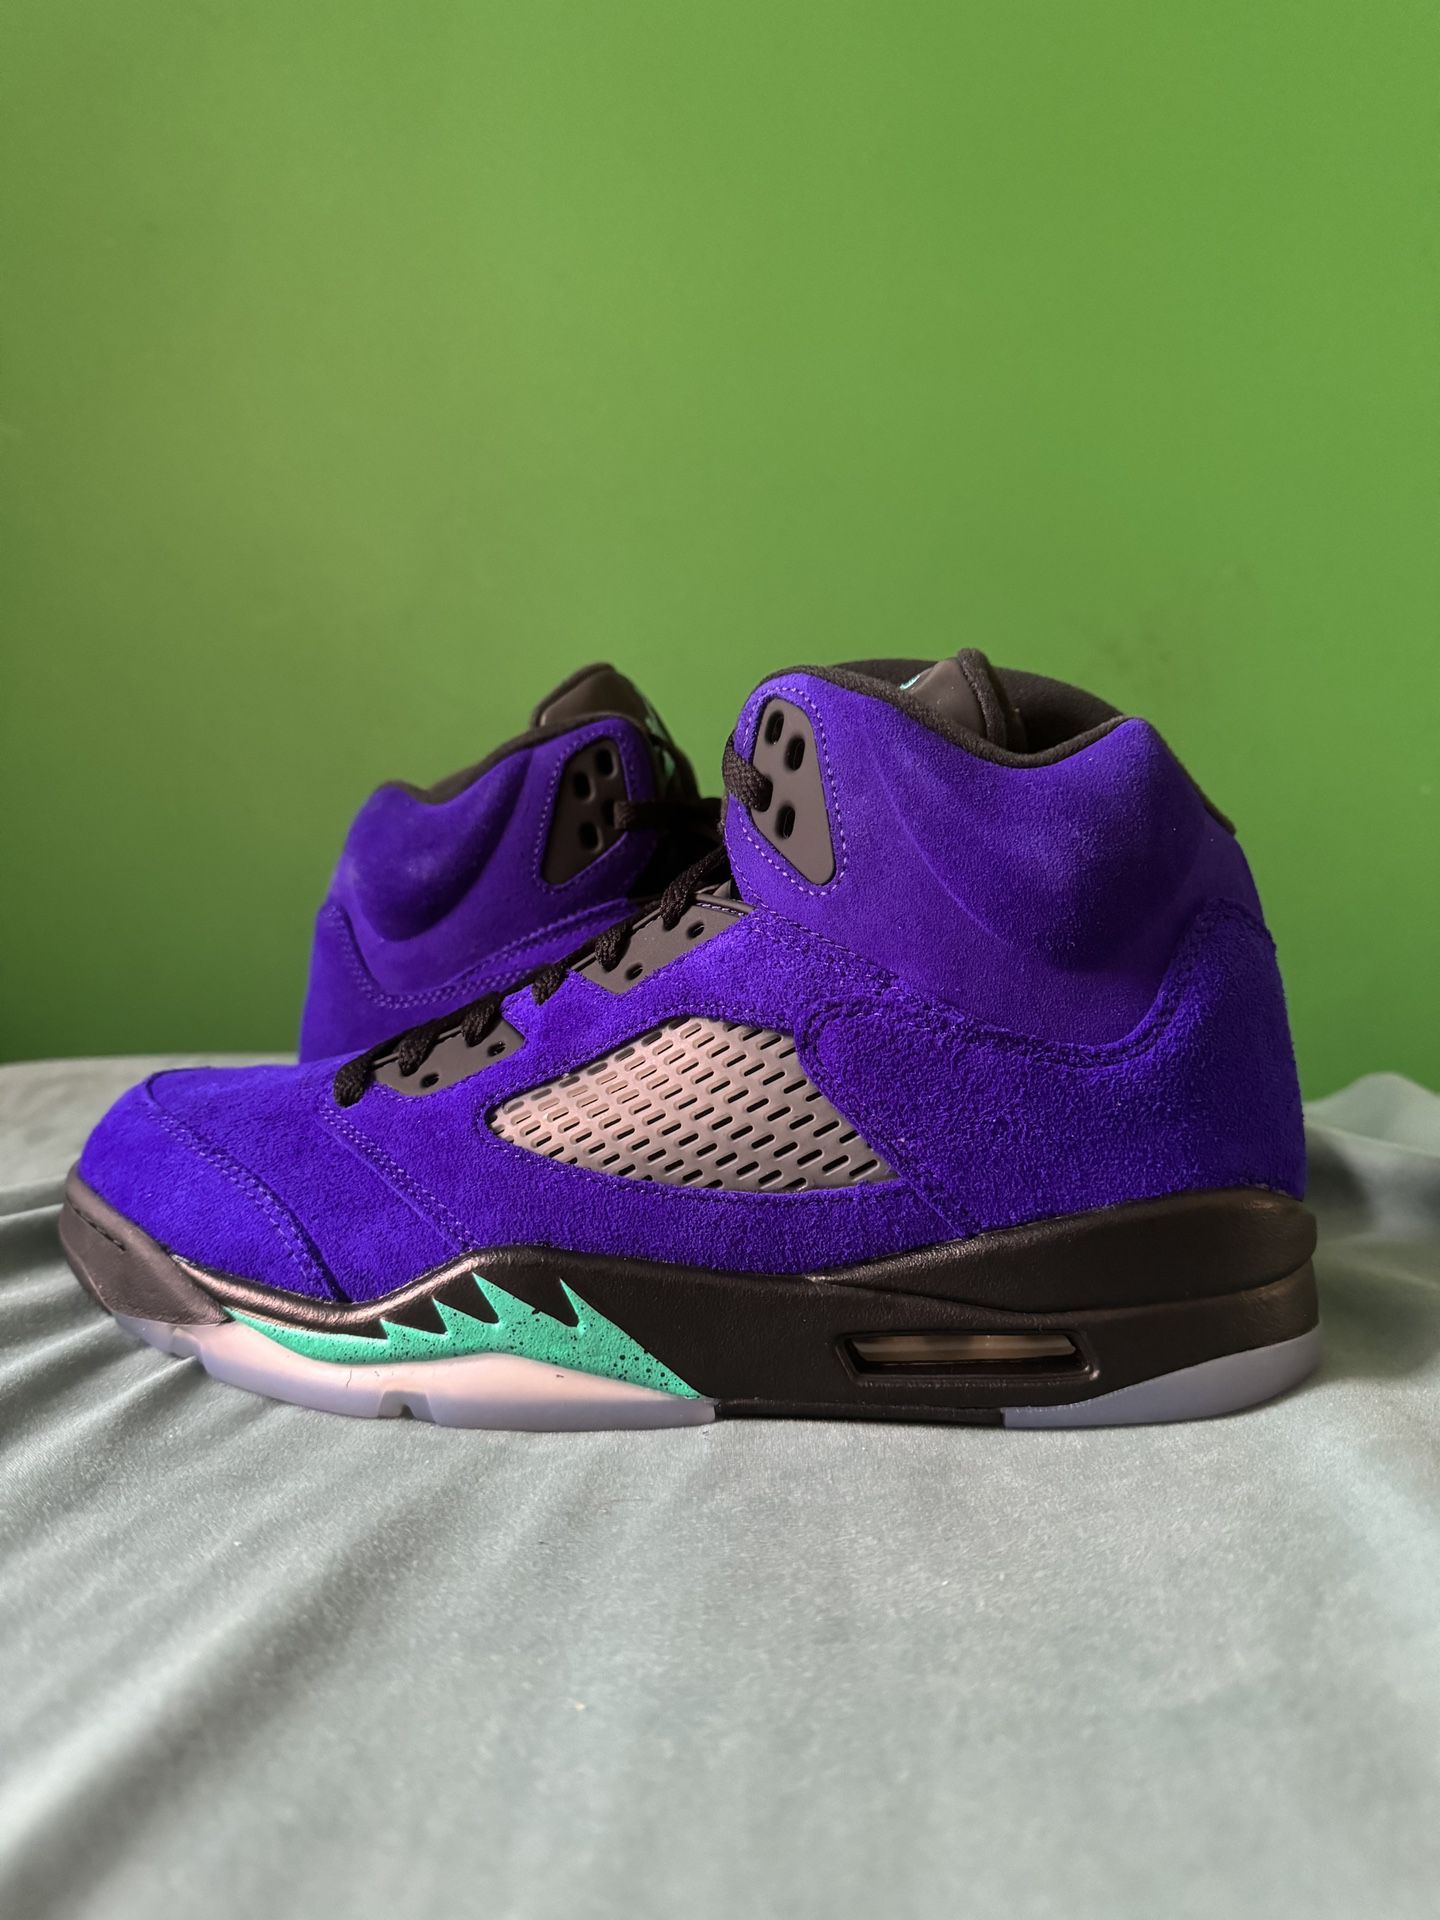 Nike Air Jordan 5 Alternate Grape Size 11.5